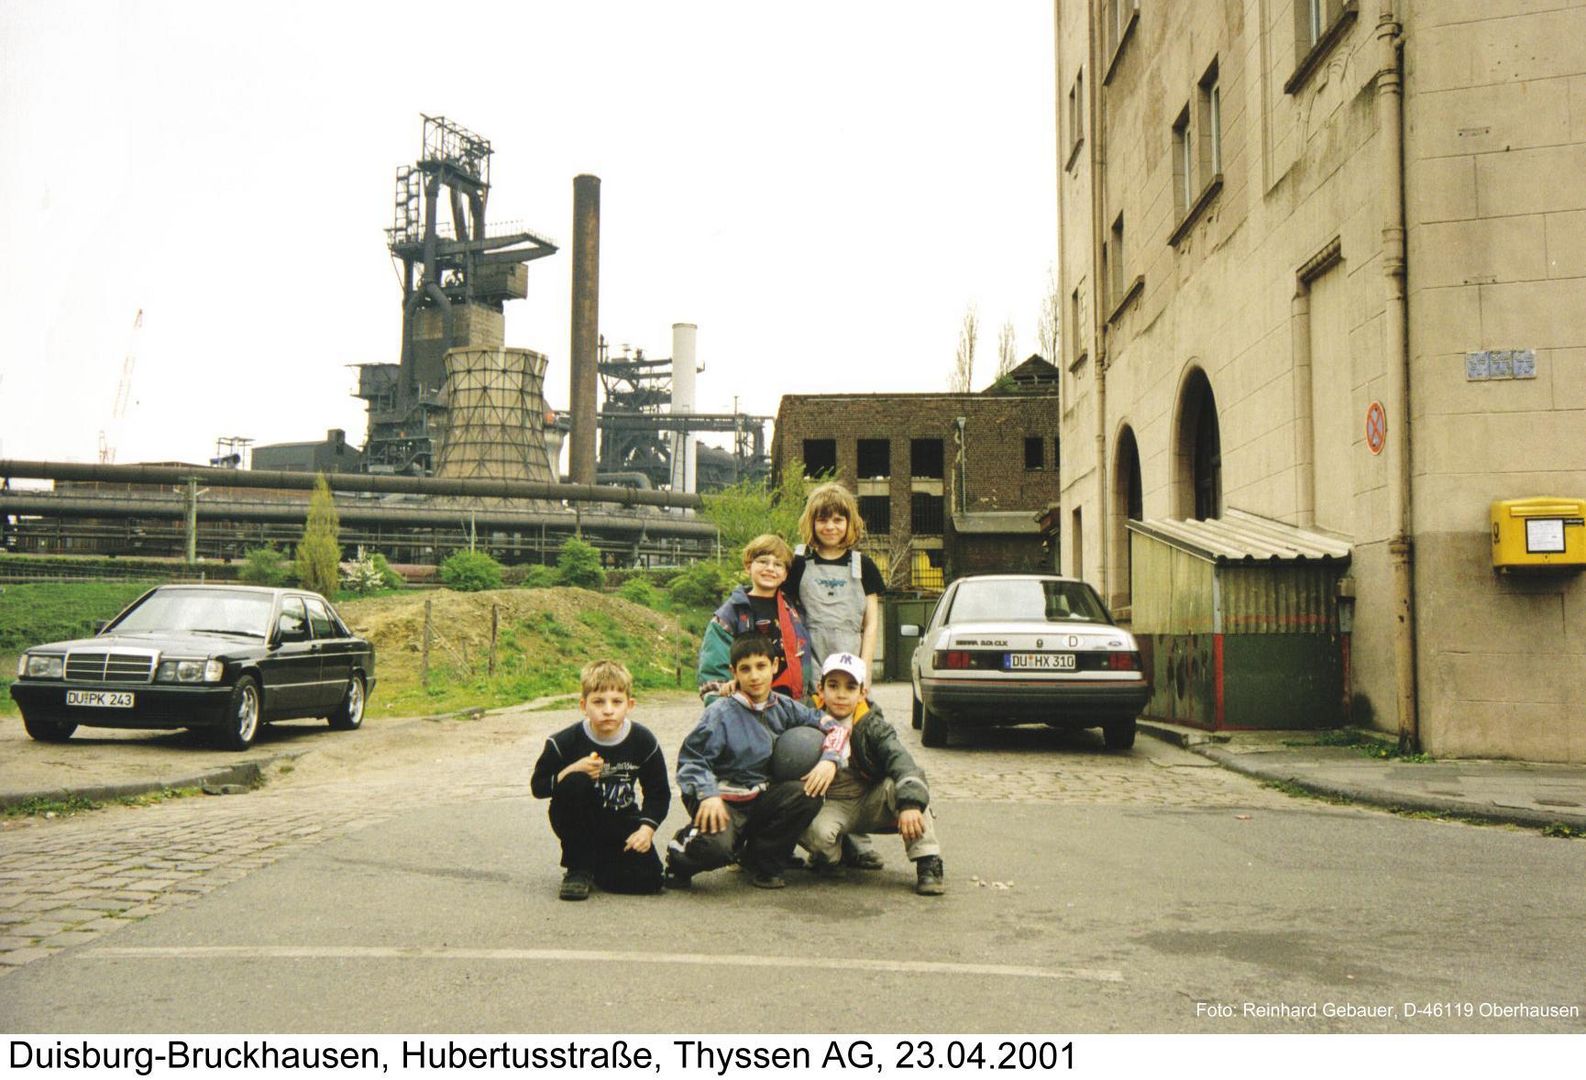 Duisburg-Beeck, Hubertusstraße, Thyssen AG, 2001